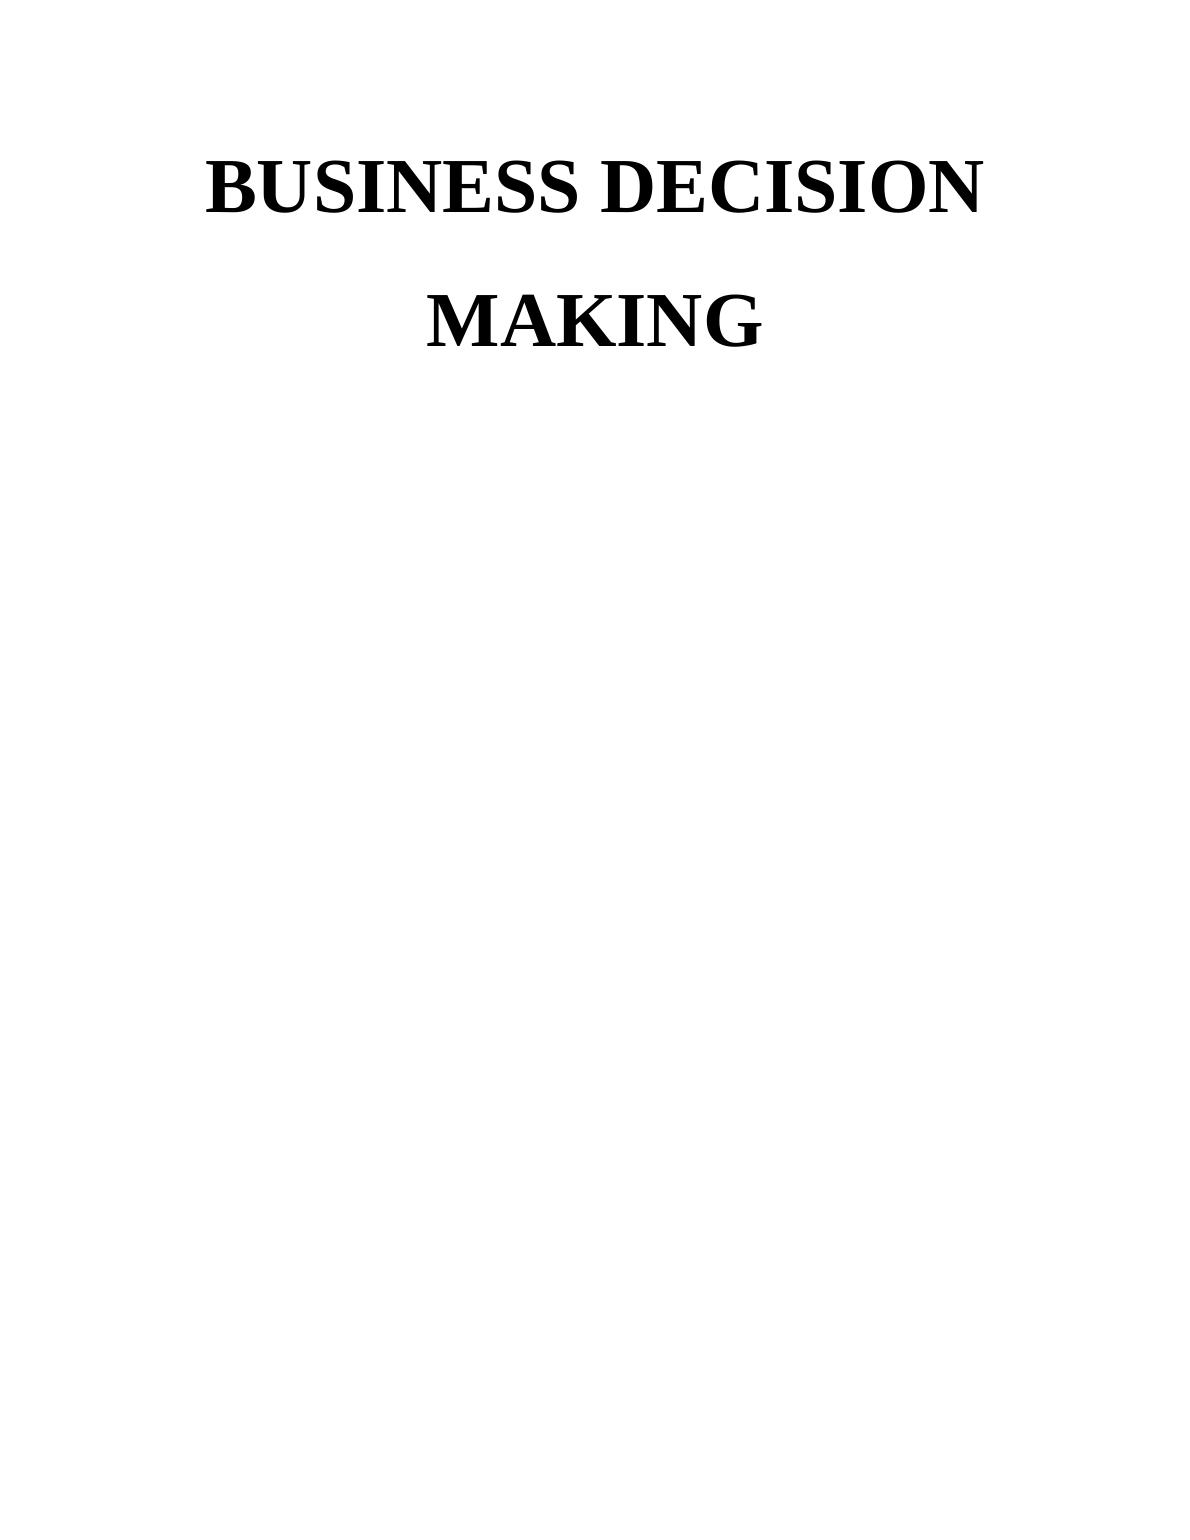 Business Decision Making Report - Murano Restaurant_1